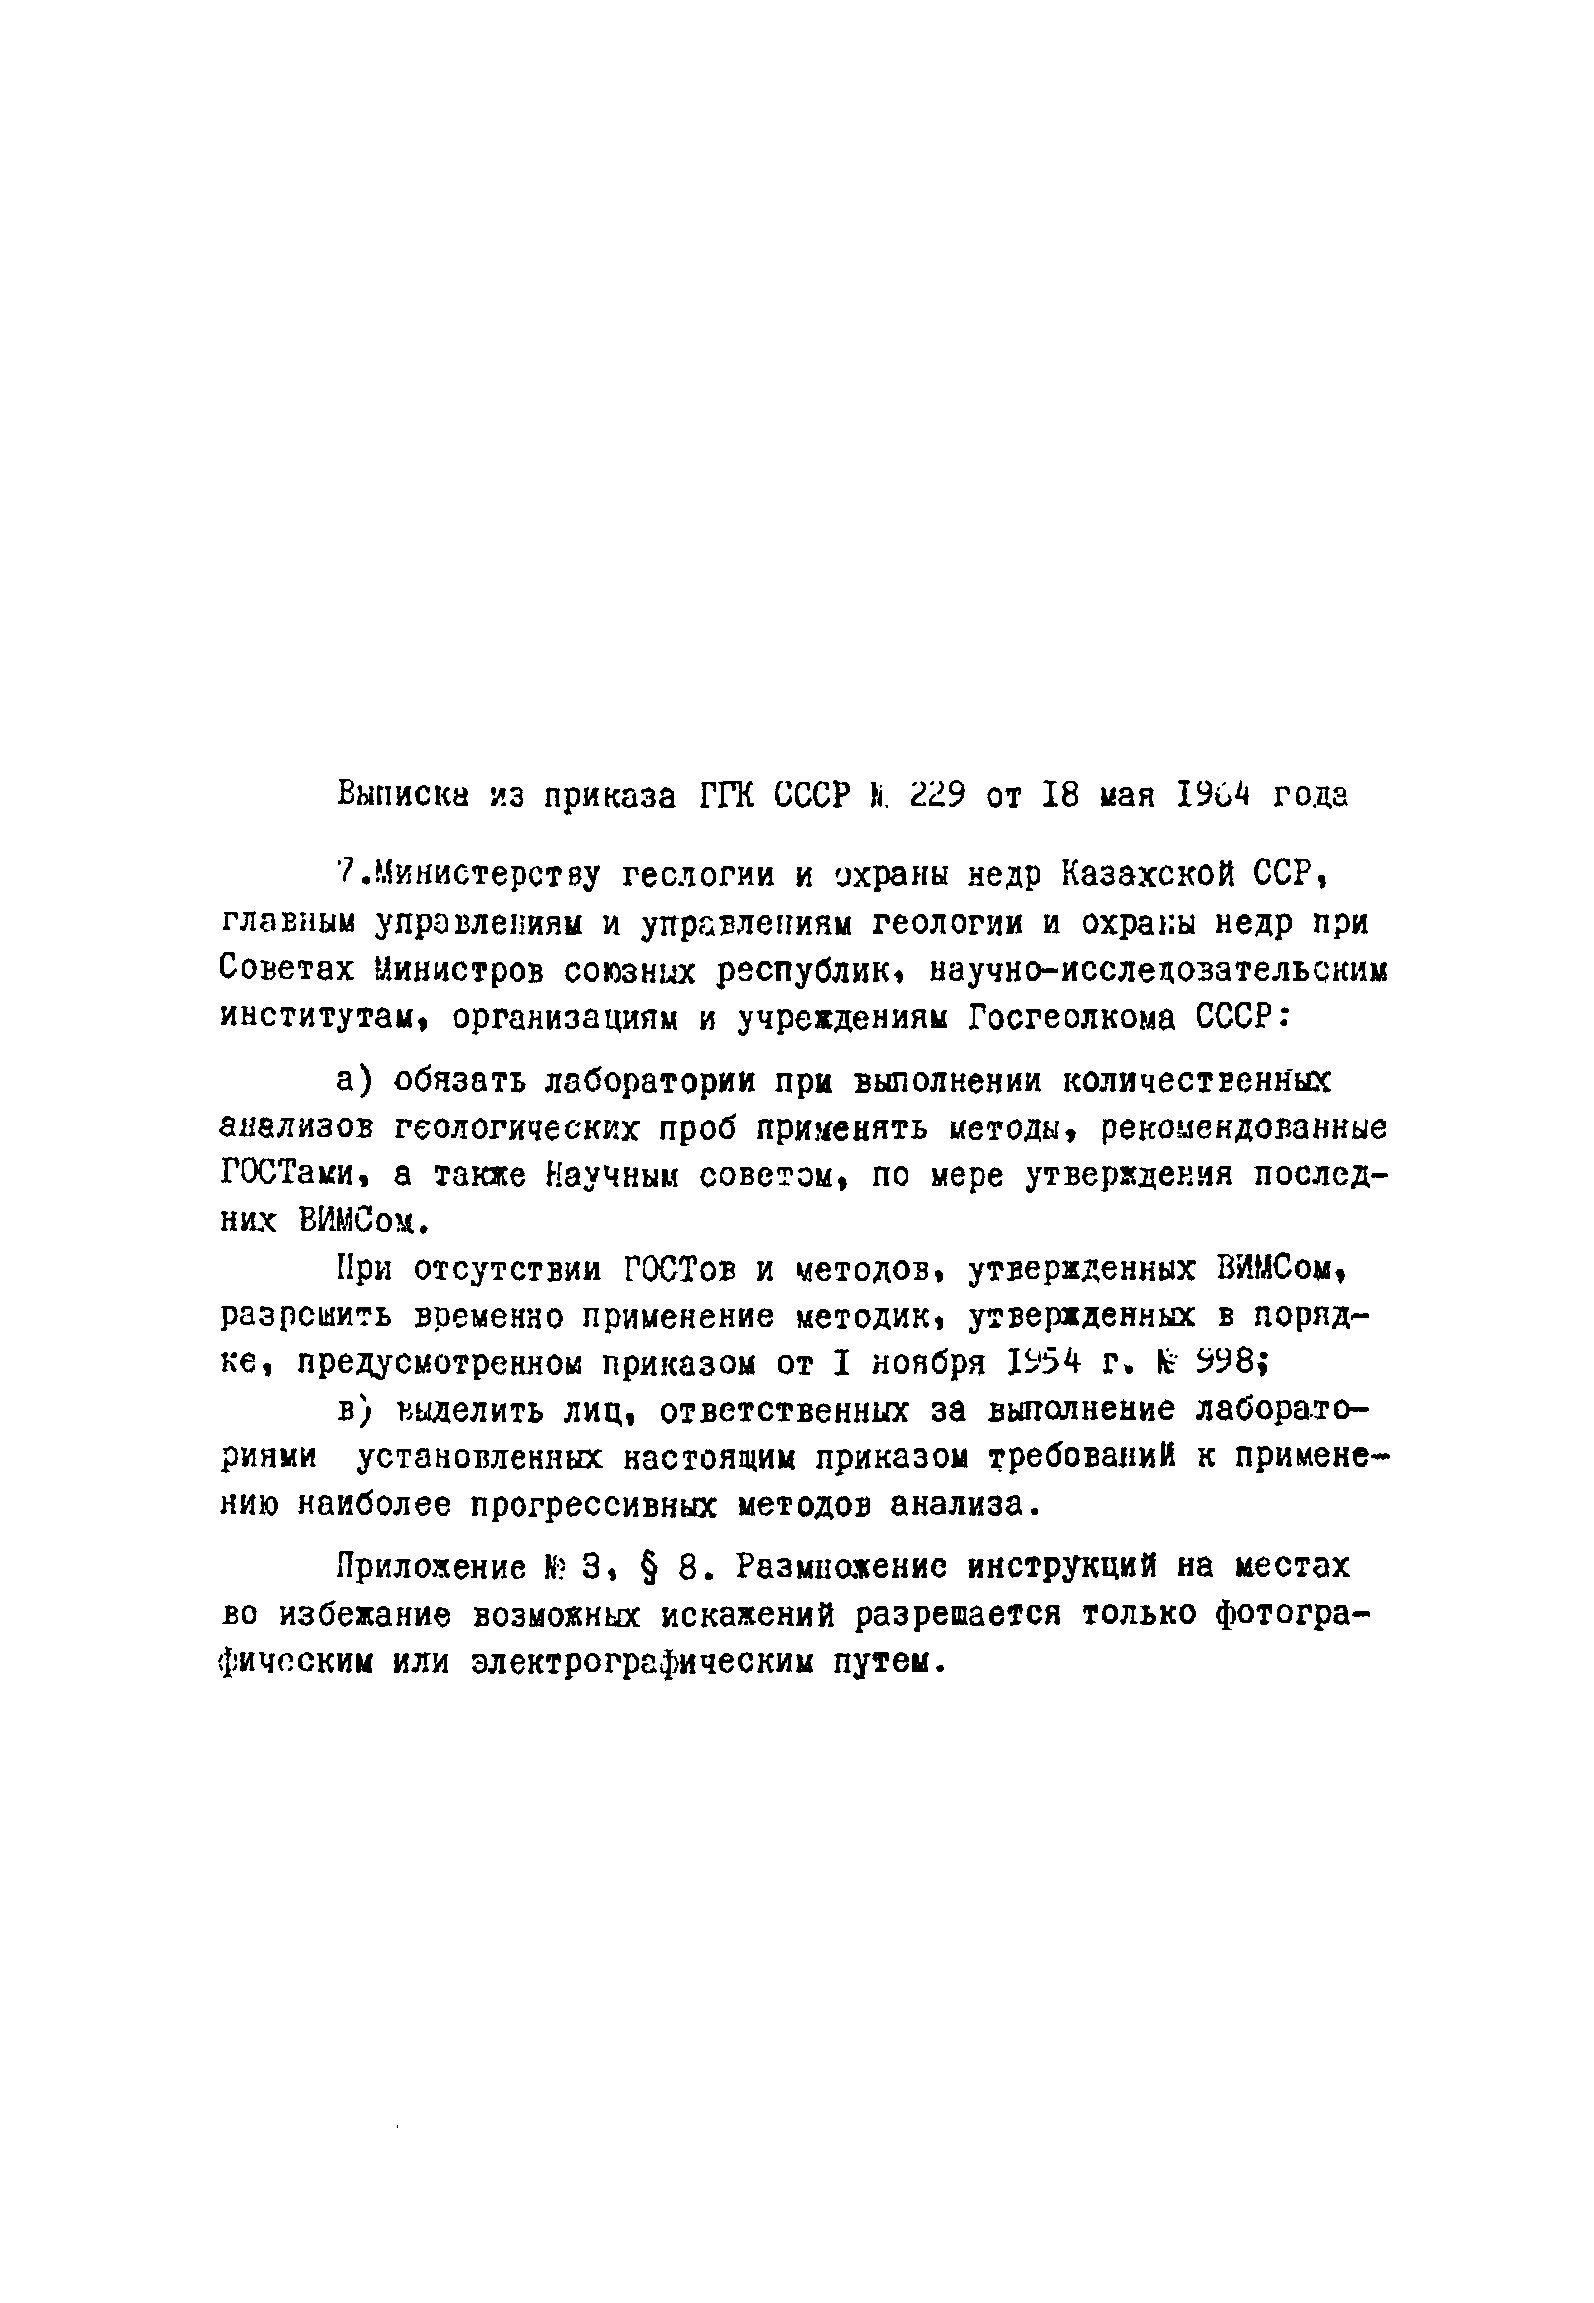 Инструкция НСАМ 26-Х